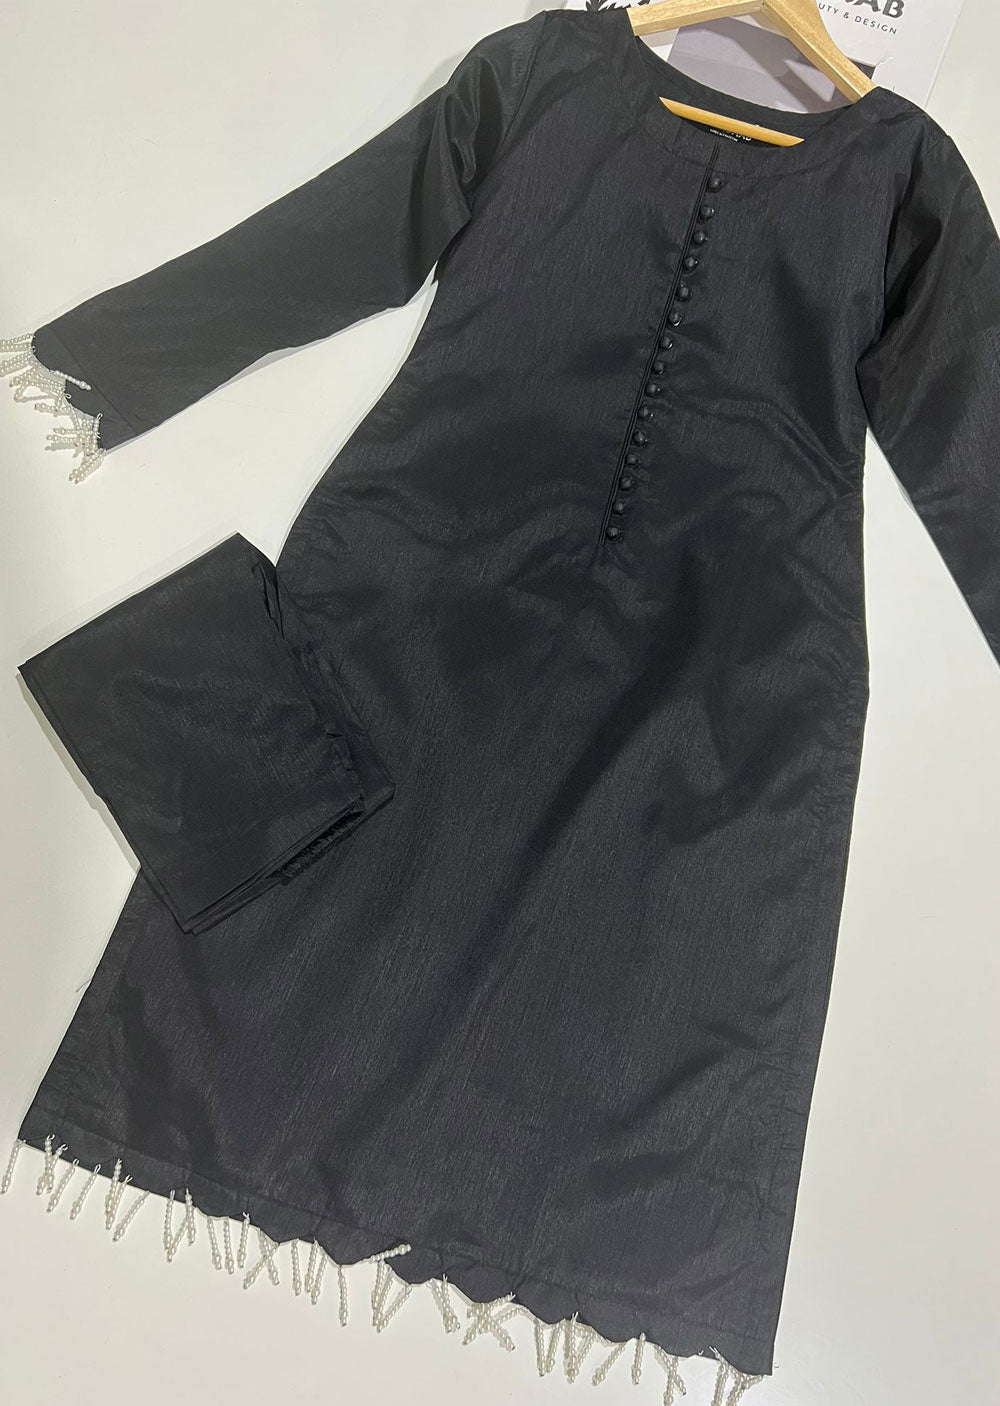 HK233 Saha - Black Readymade Raw Silk Suit - Memsaab Online